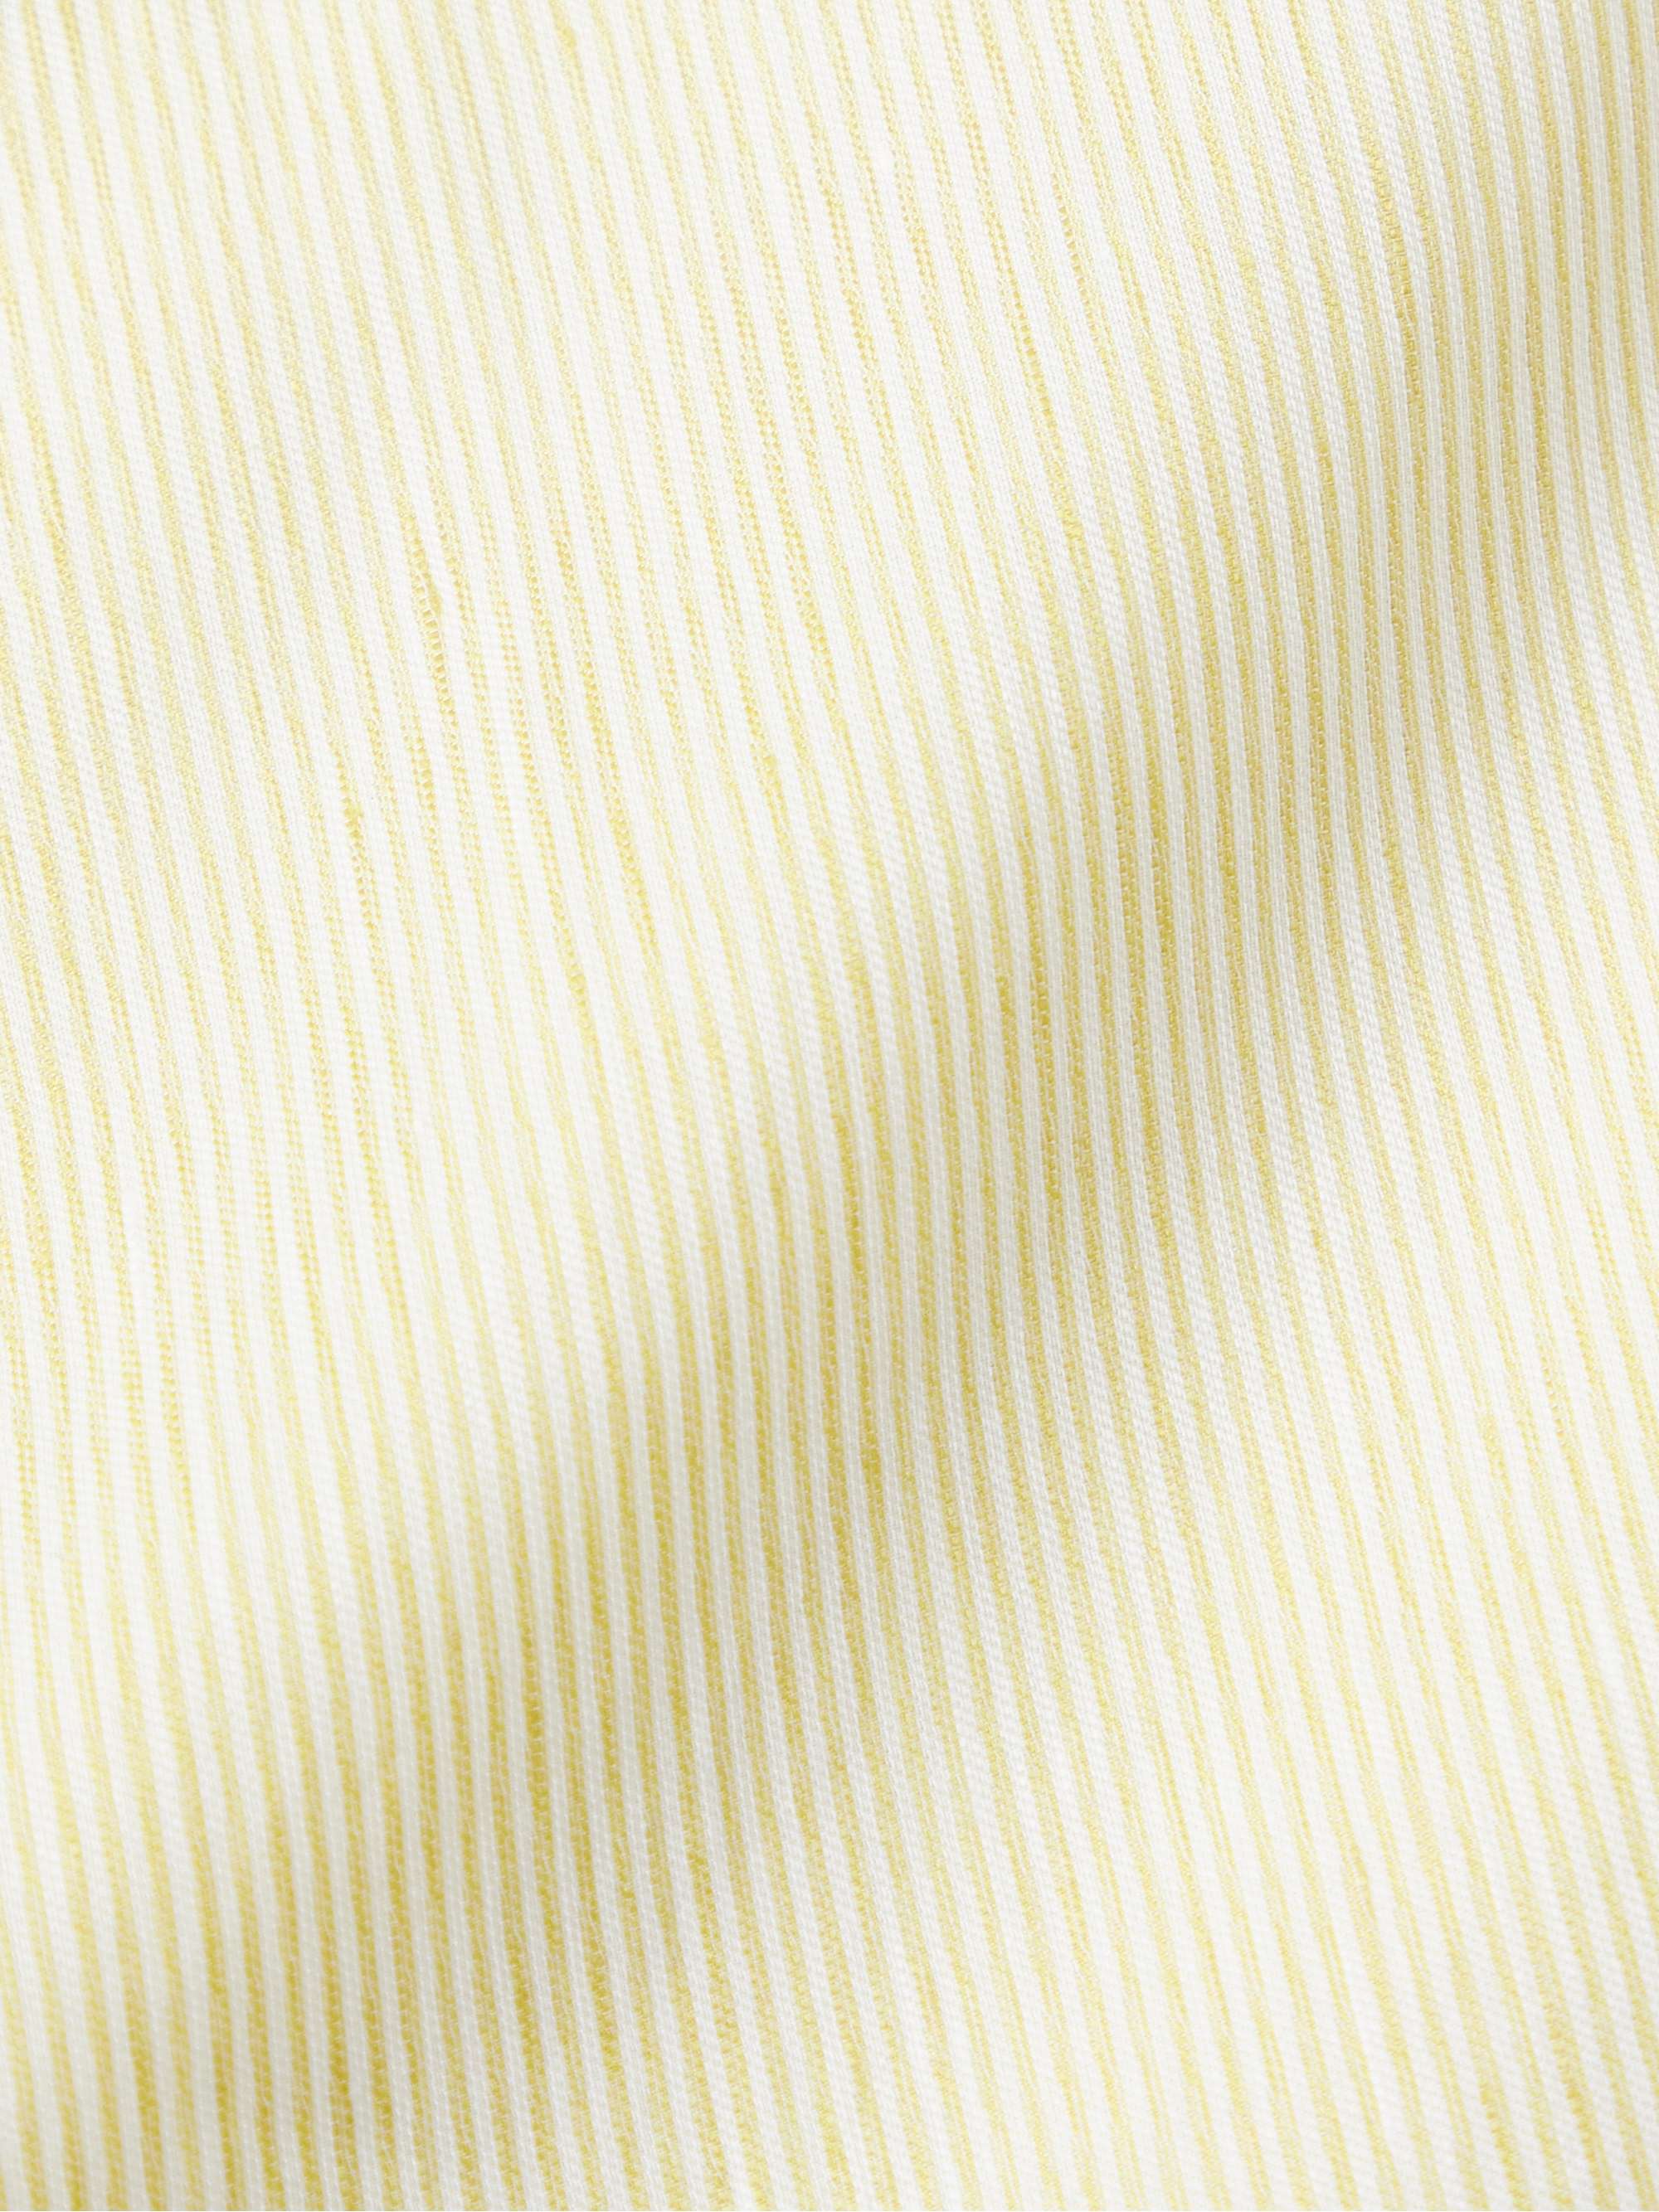 BRIONI Striped Cotton and Linen-Blend Shirt